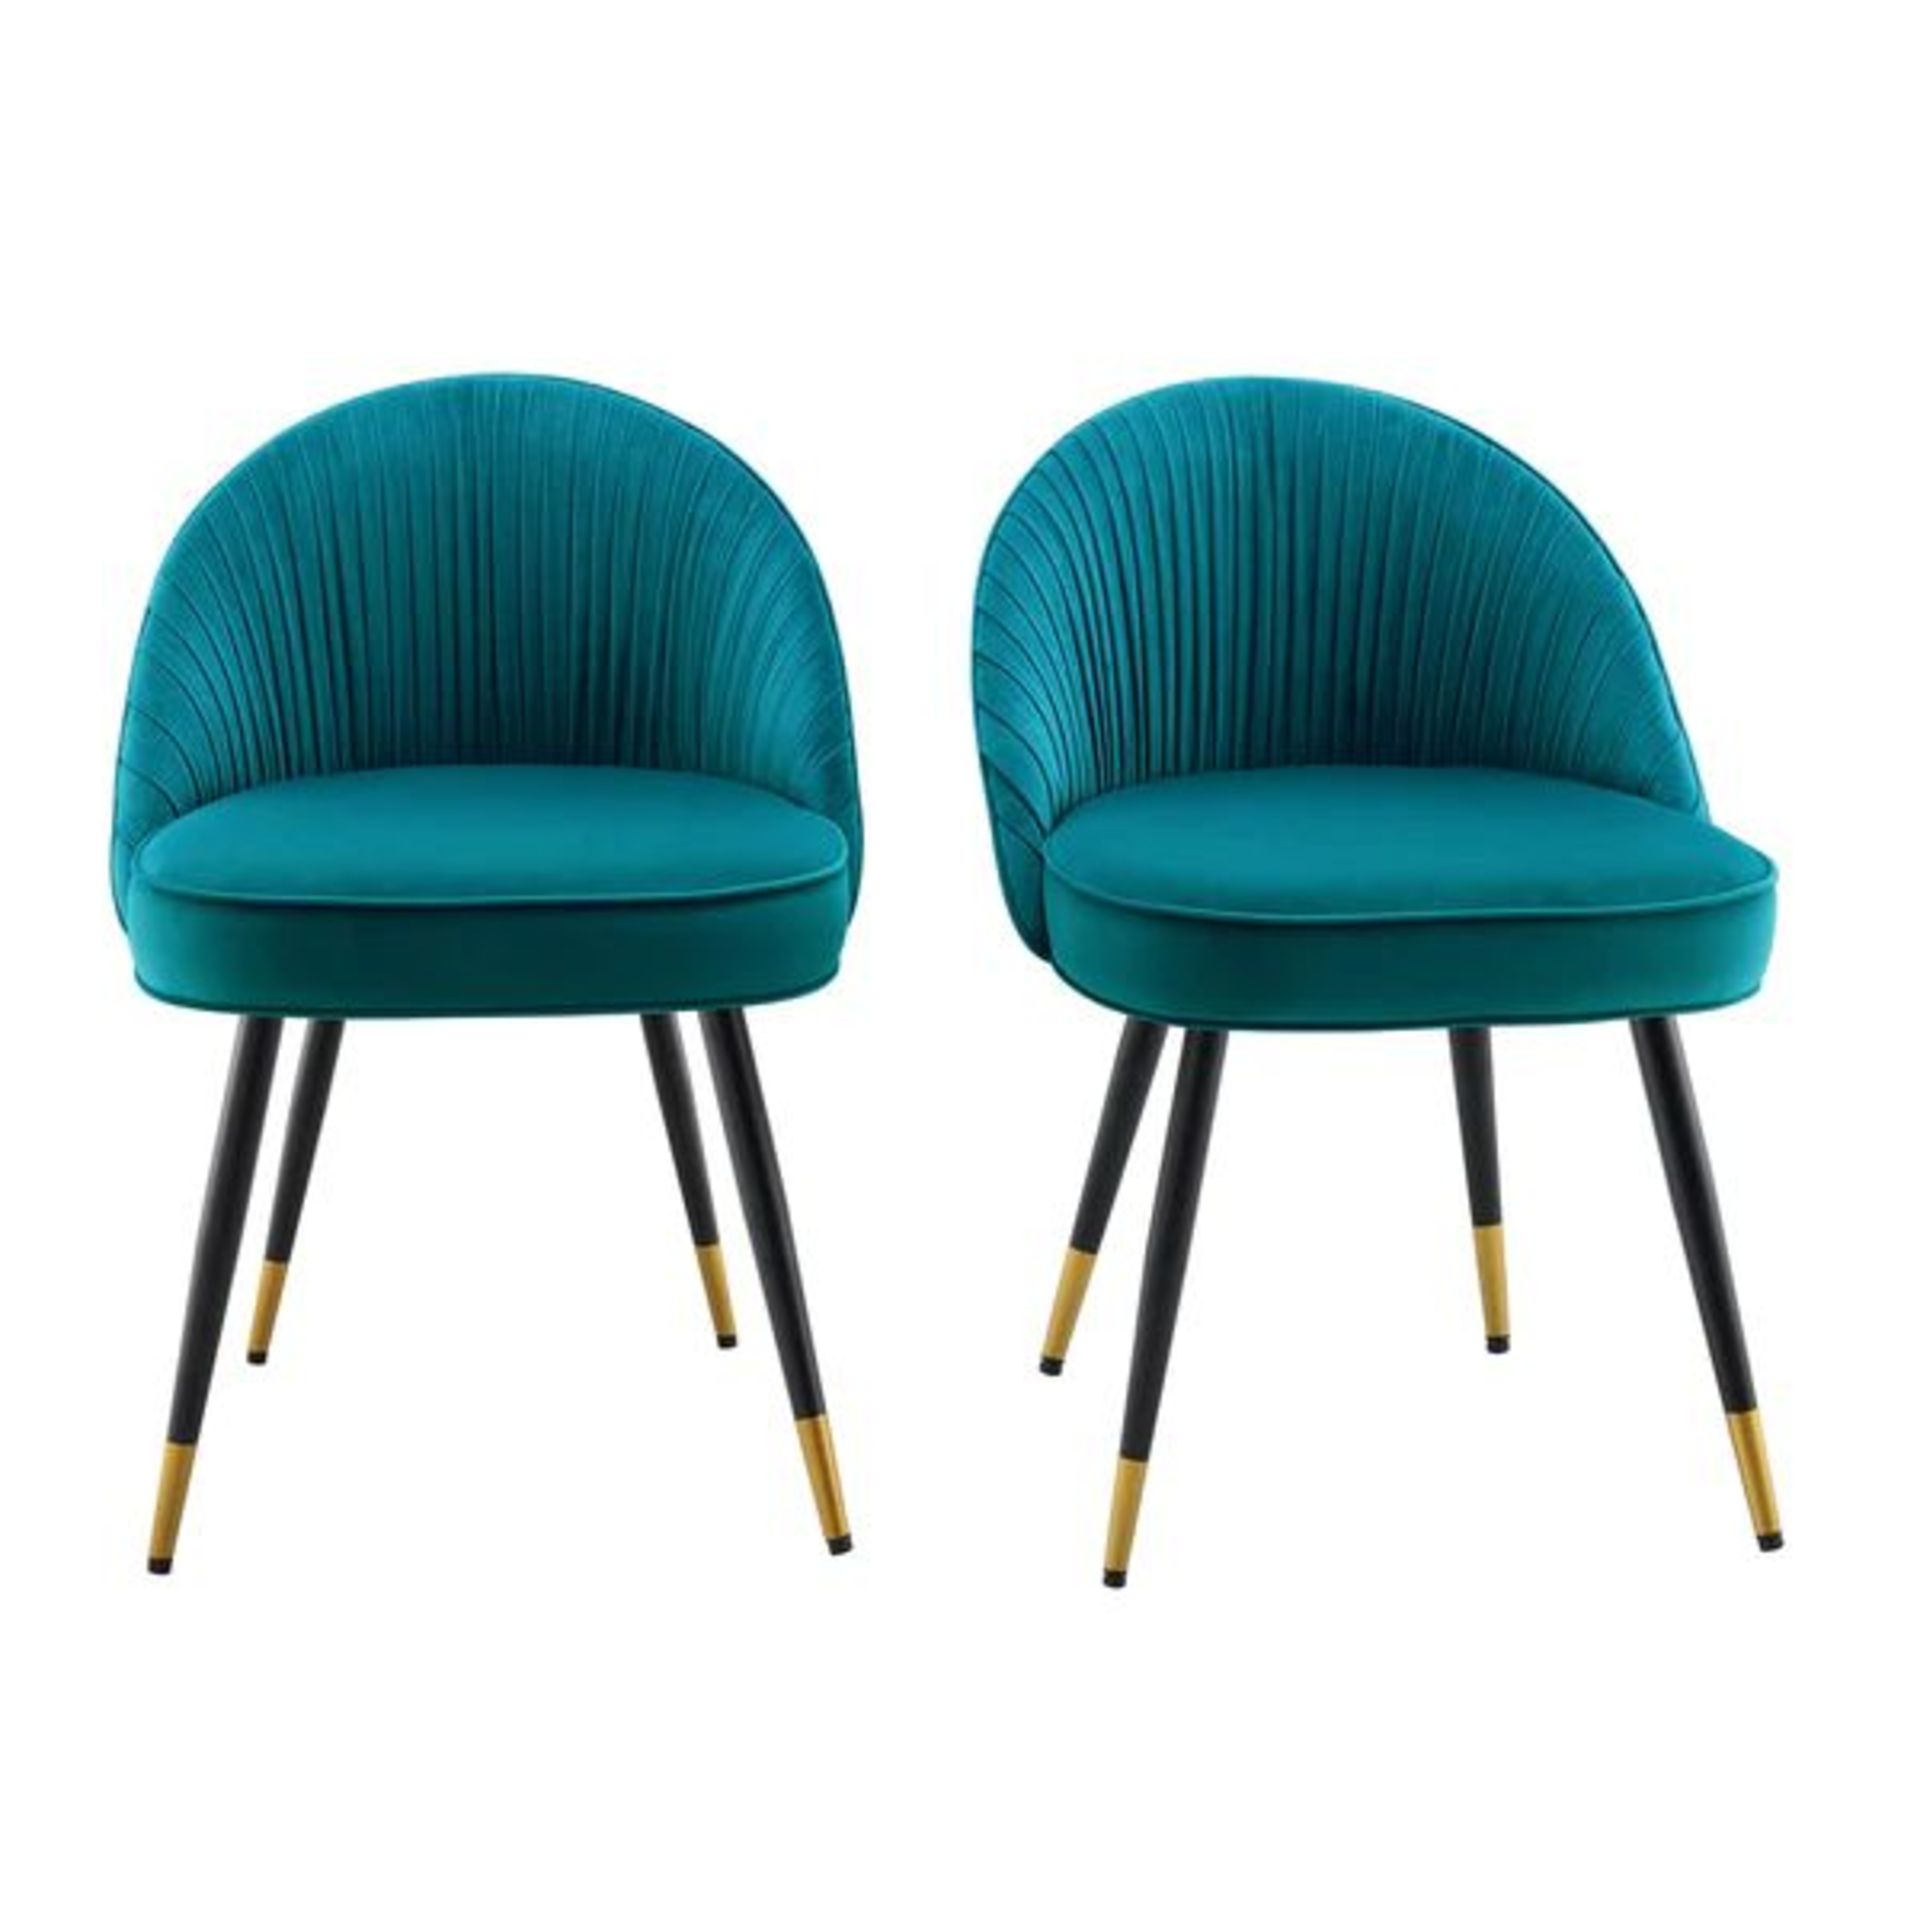 Miyae Set of 2 Pleated Teal Velvet Upholstered Dining Chairs. - R14. RRP £259.99. Velvet-smooth - Image 2 of 2